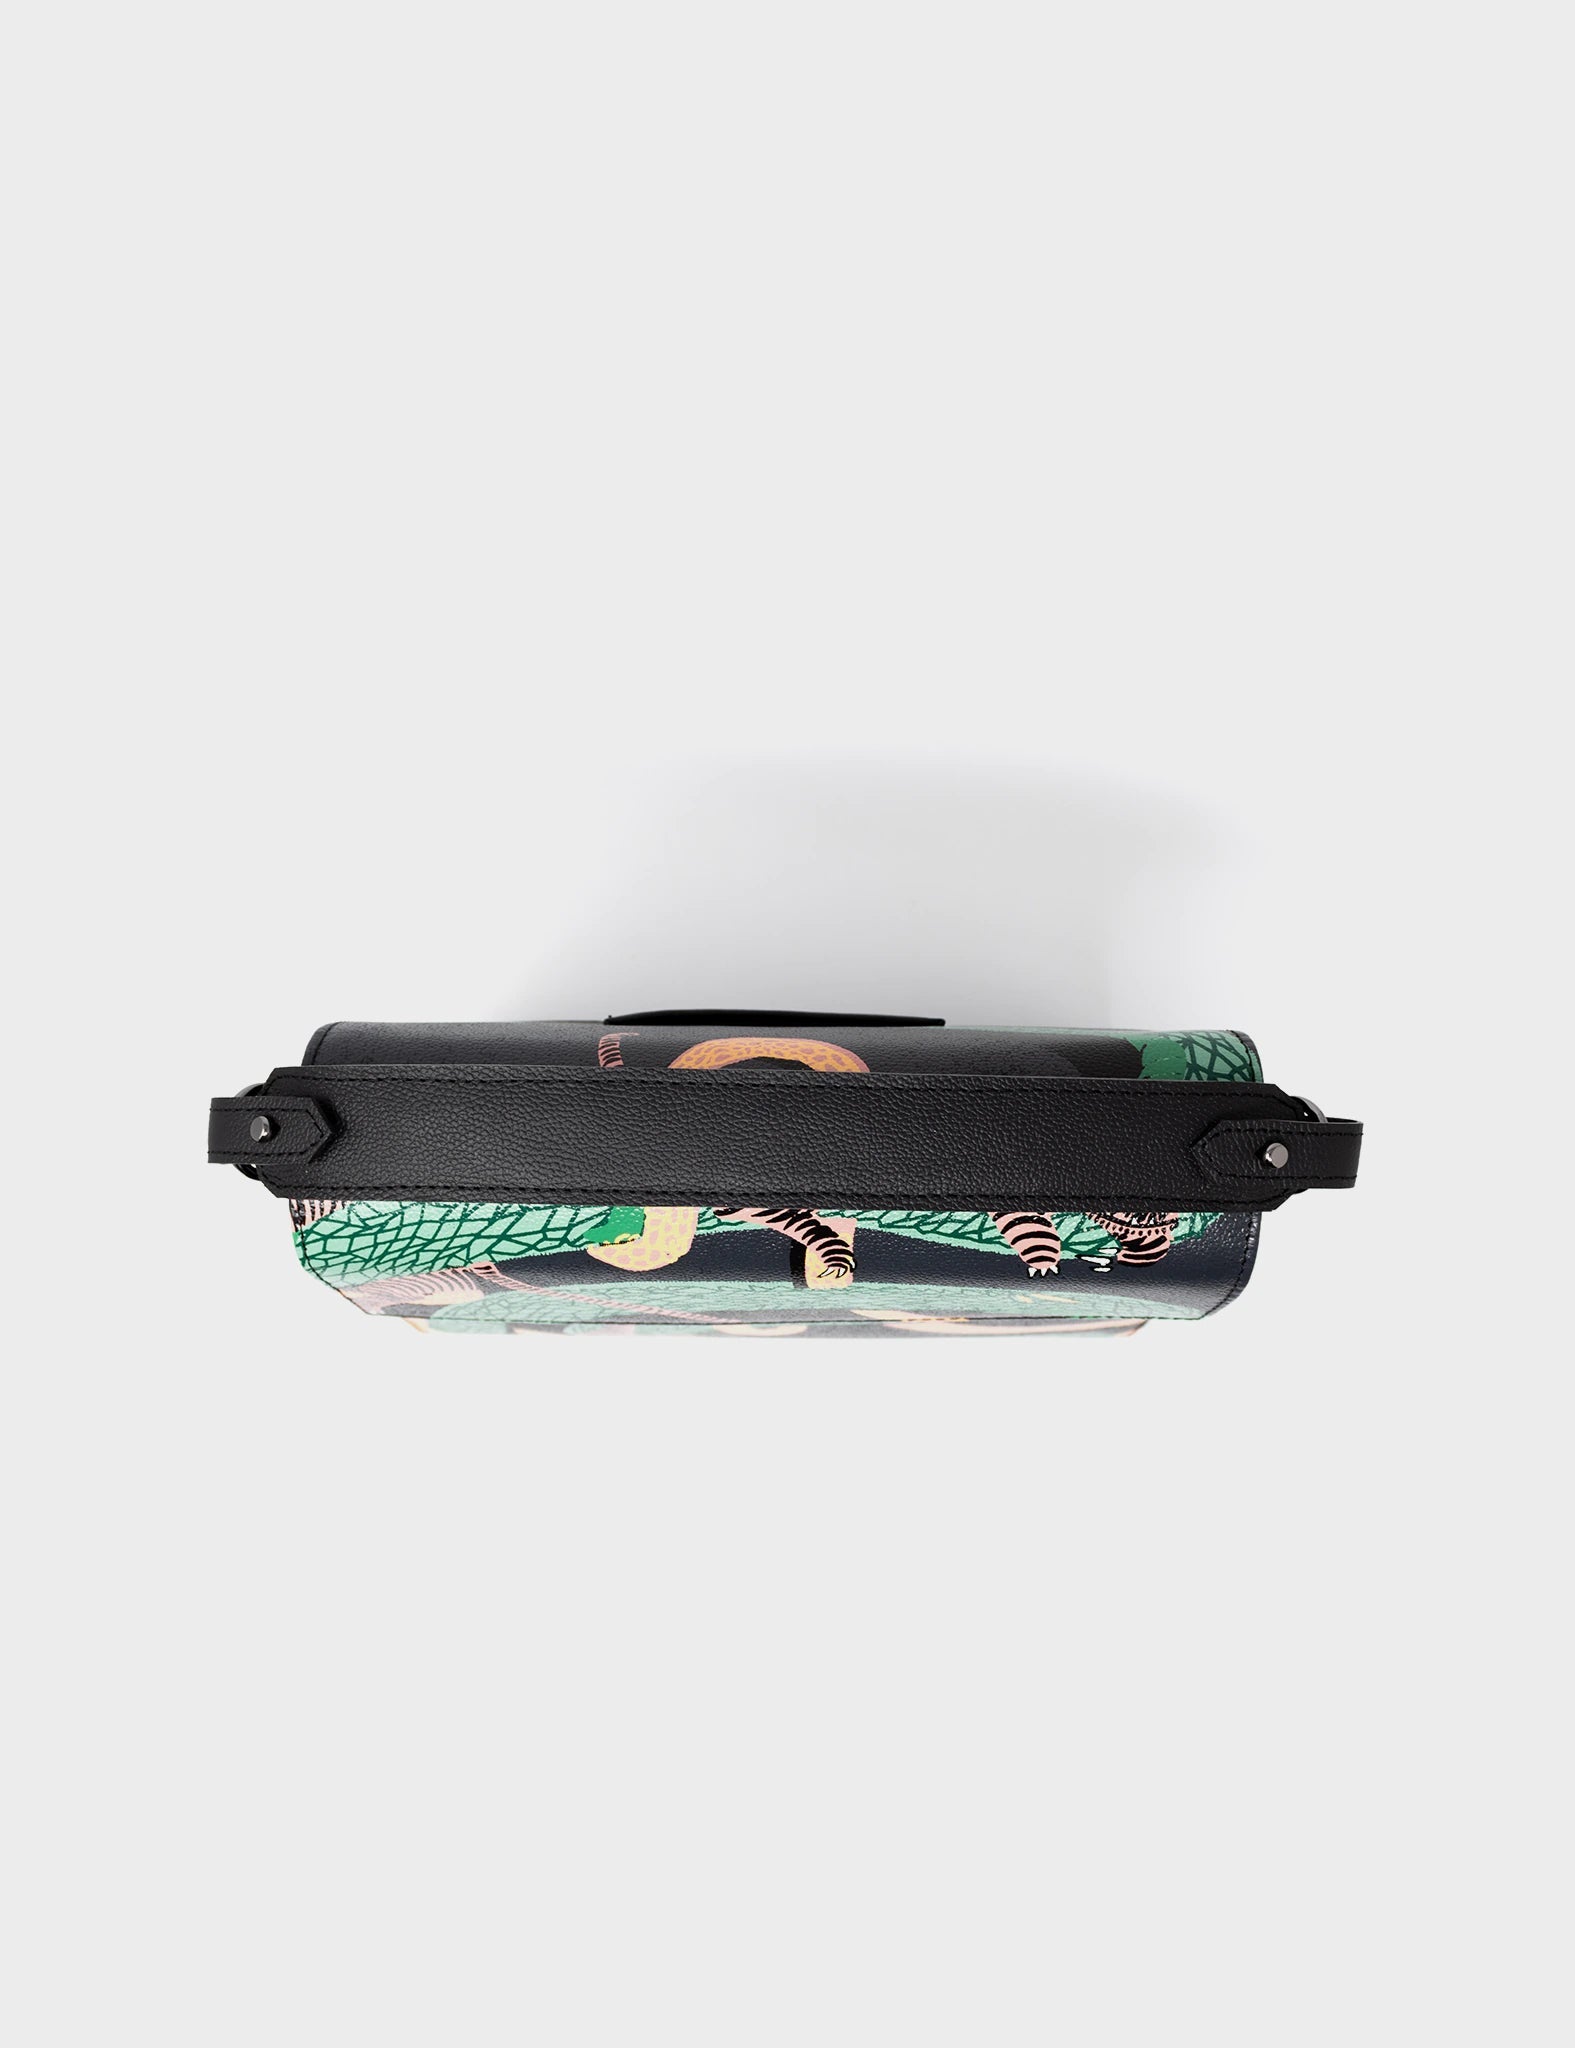 Medium Crossbody Handbag Black Leather - Tiger And Snake Print - Top view